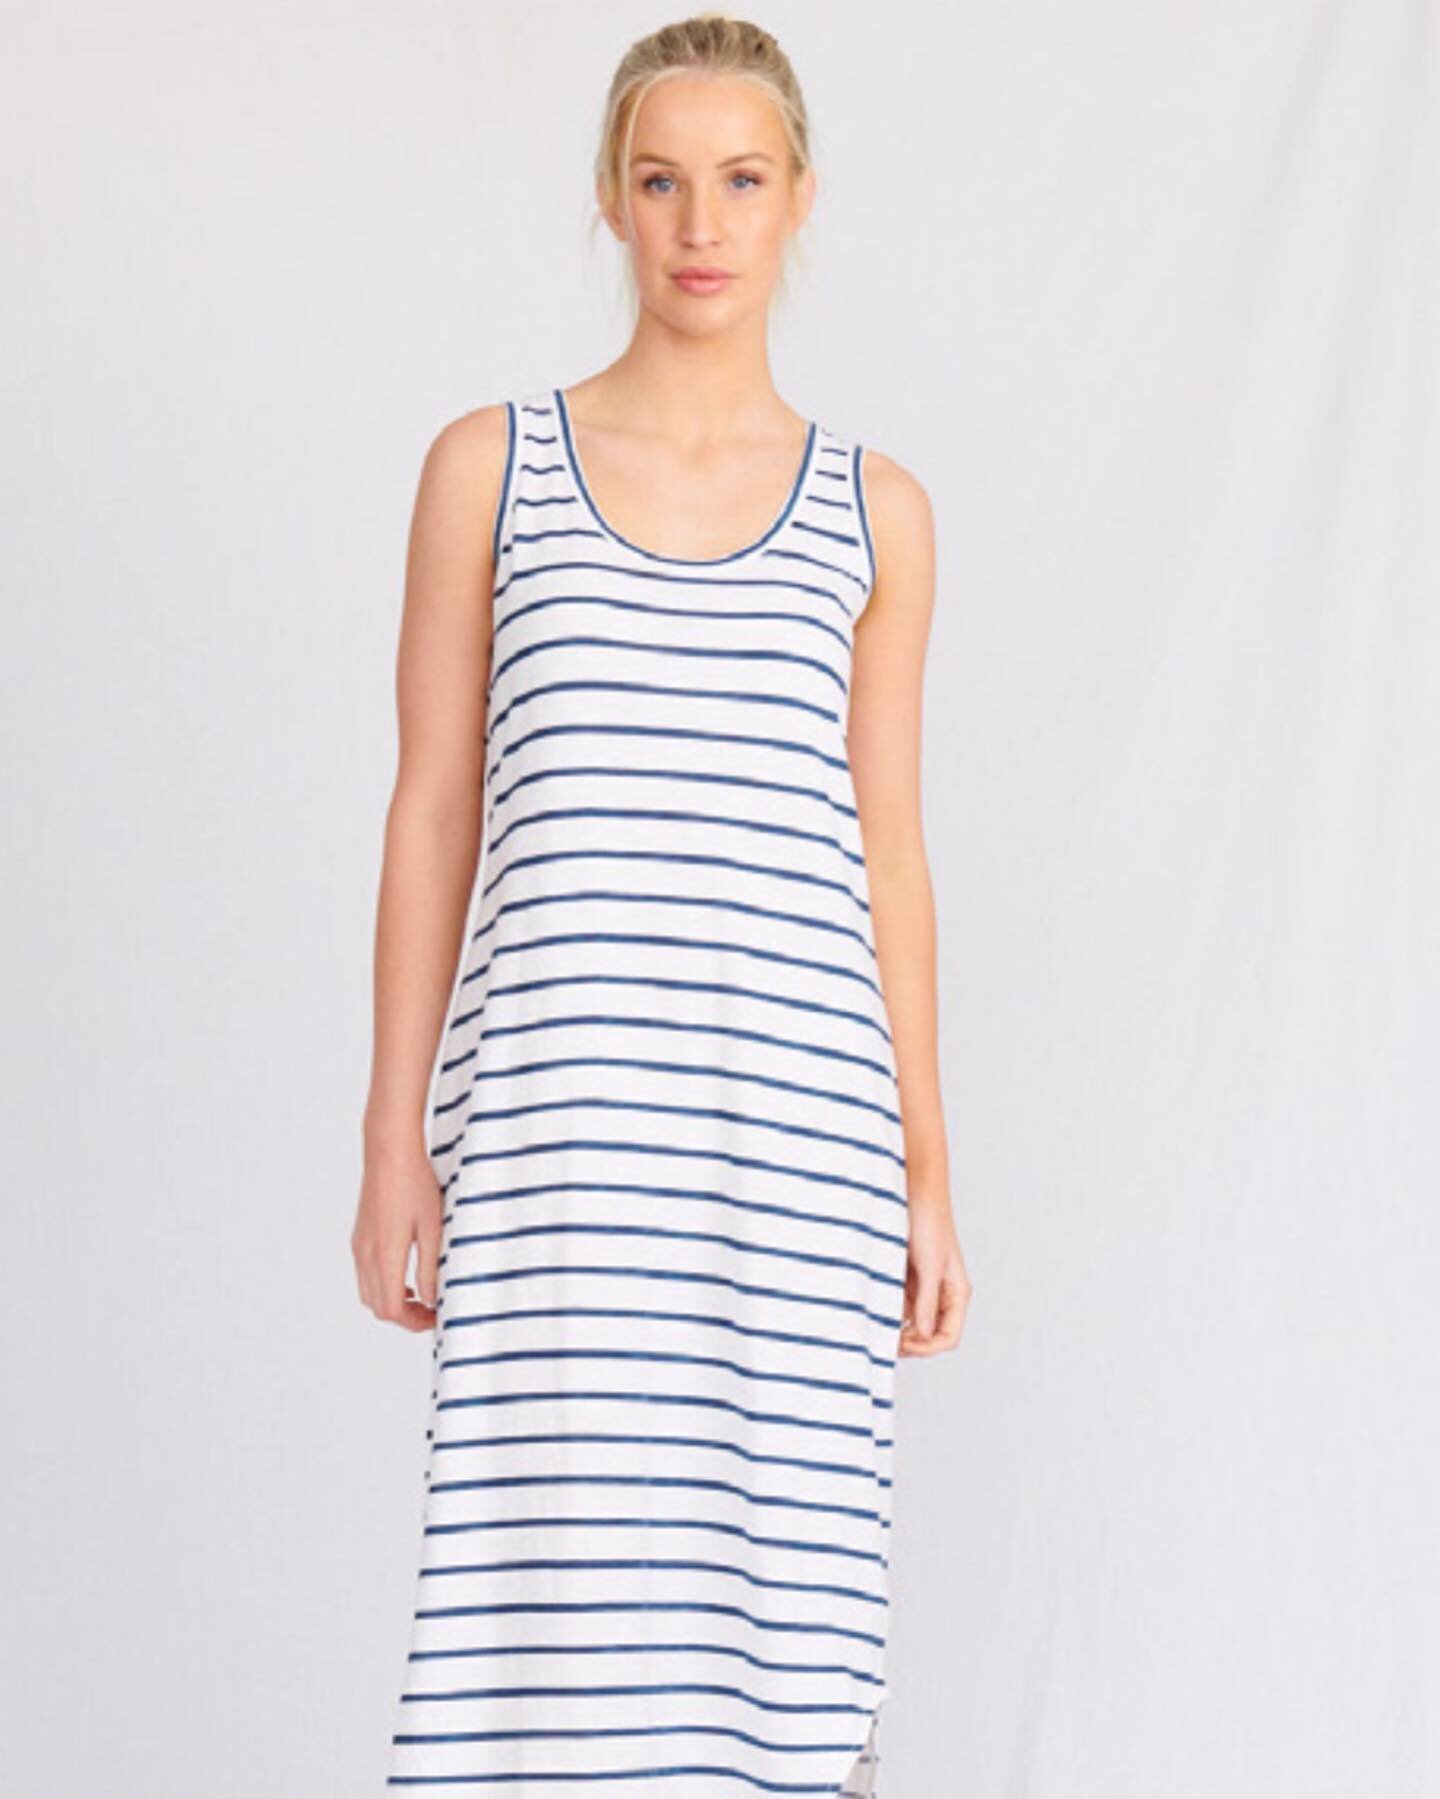 Nautical stripes in organic cottons✔️
.
.
.
.
#organic #cotton #essentials #dresses #luluorganicessentials 
#comfortzone #classicstyle